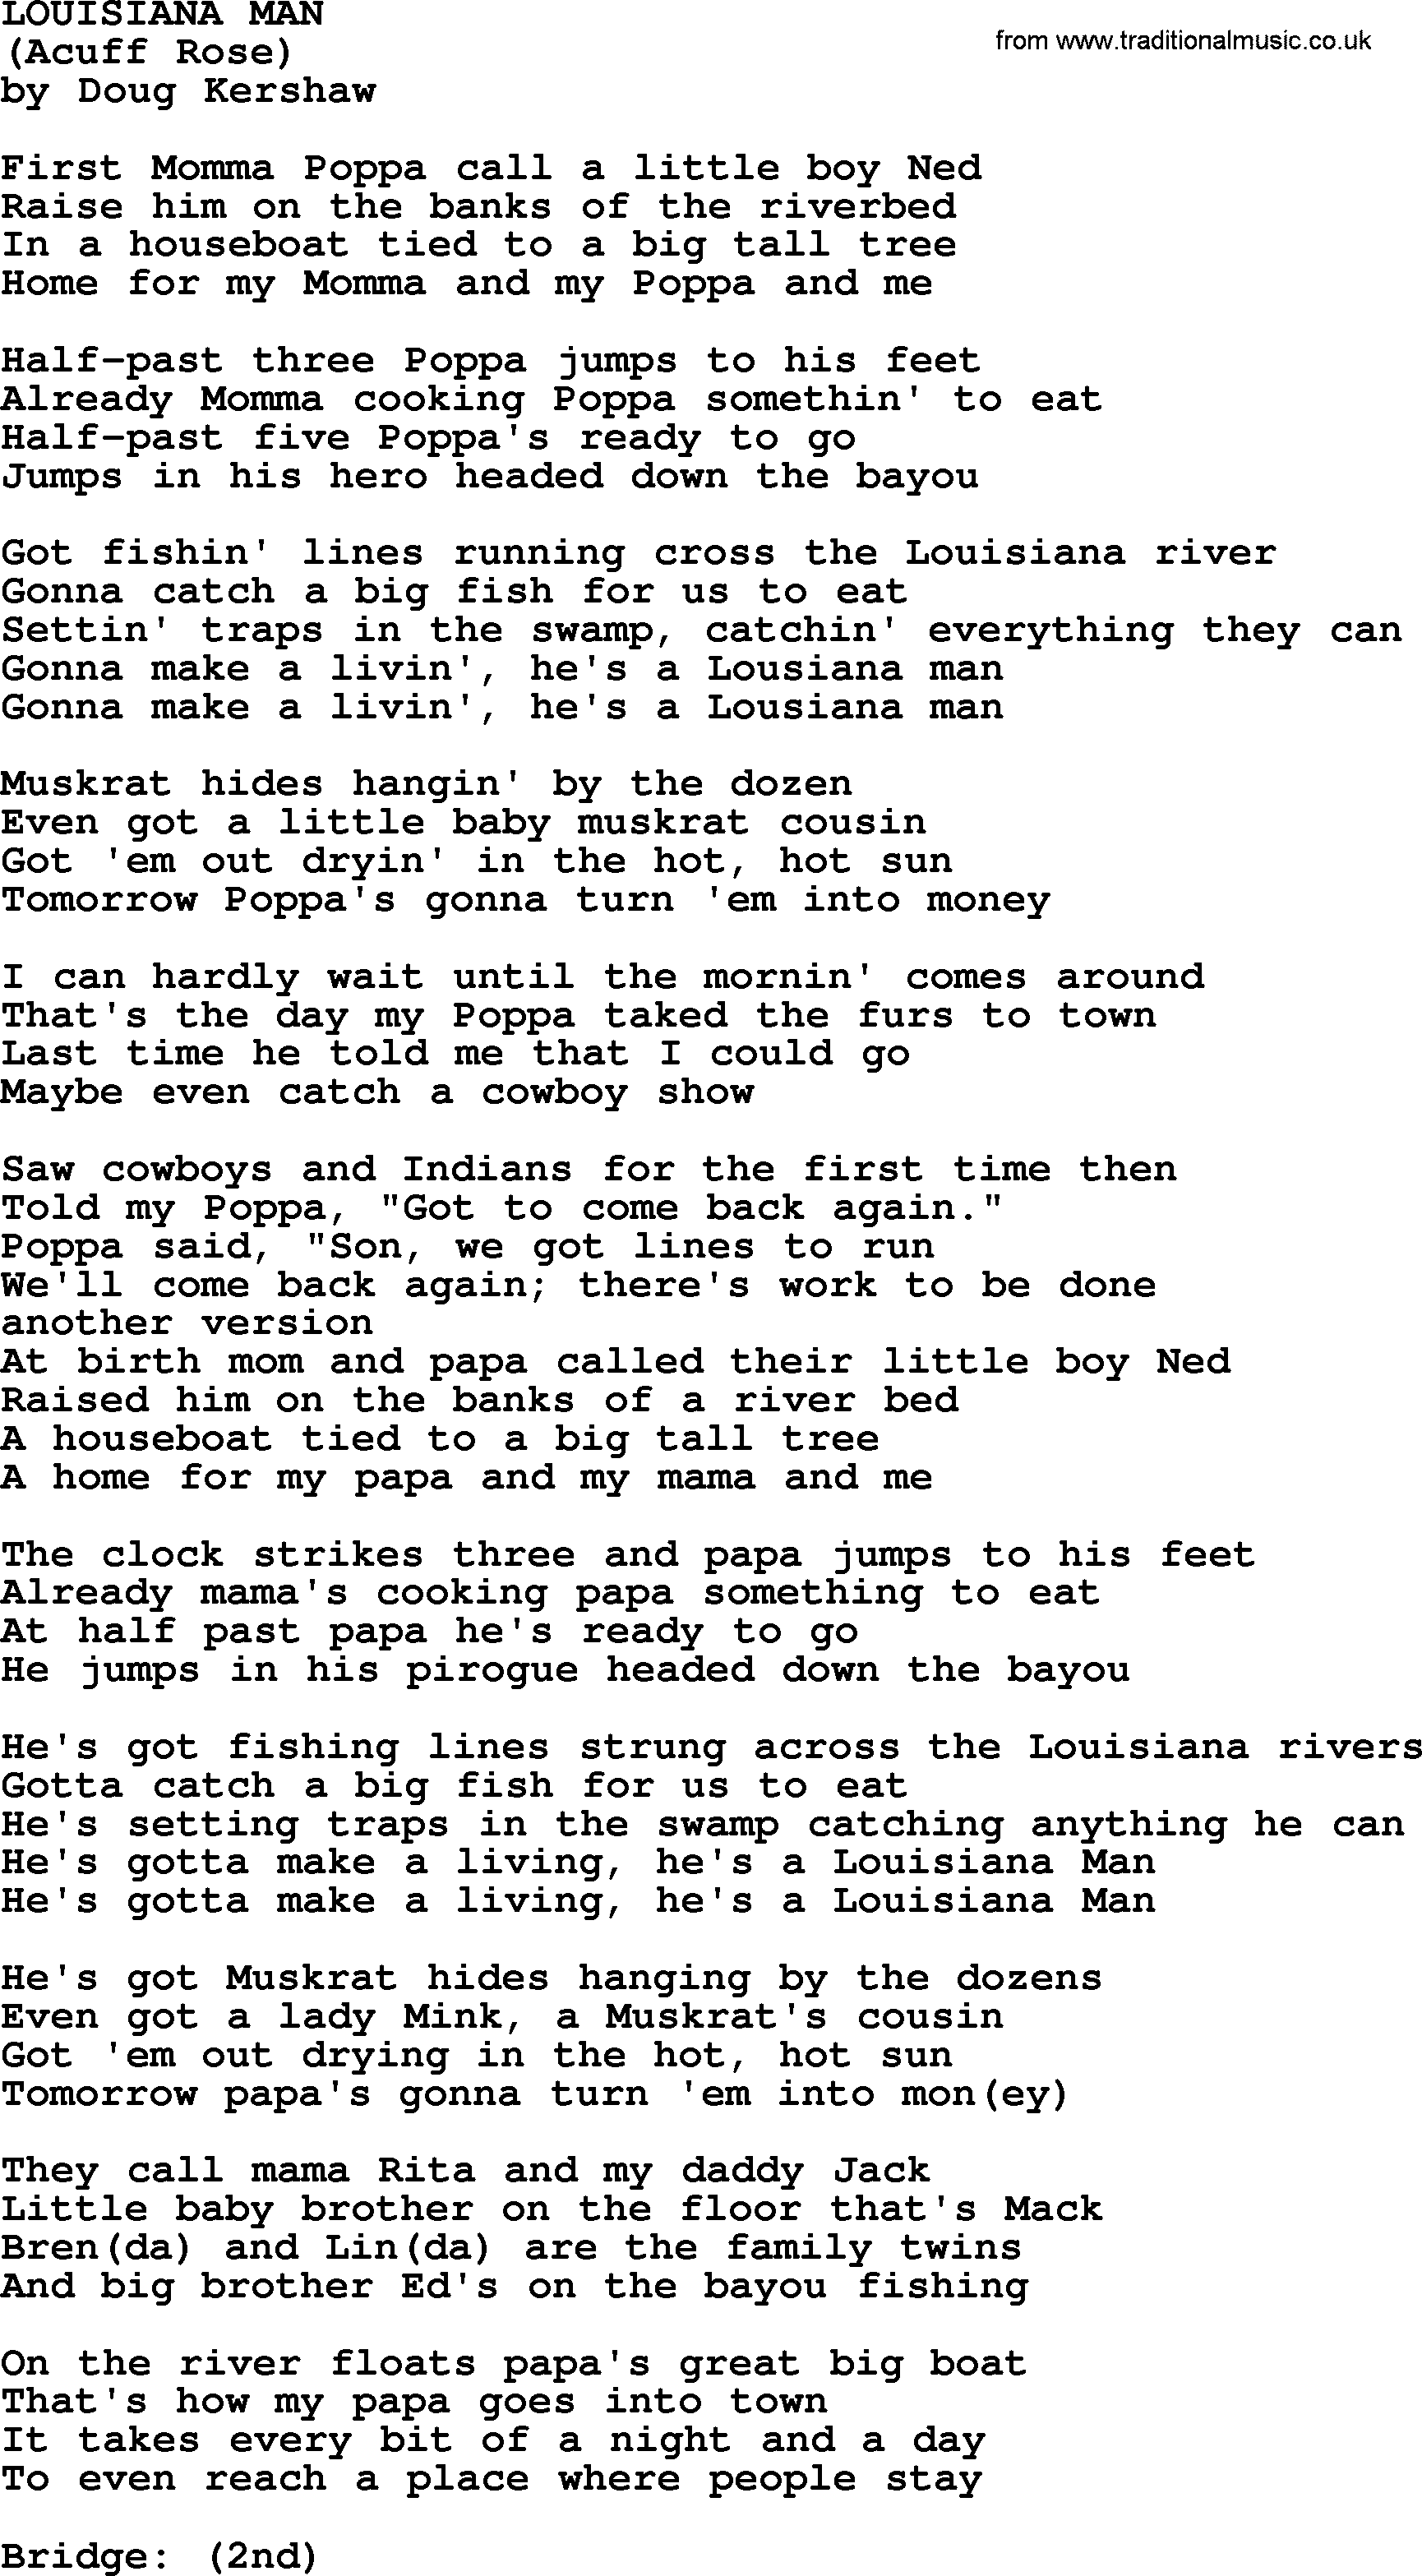 The Byrds song Louisiana Man, lyrics